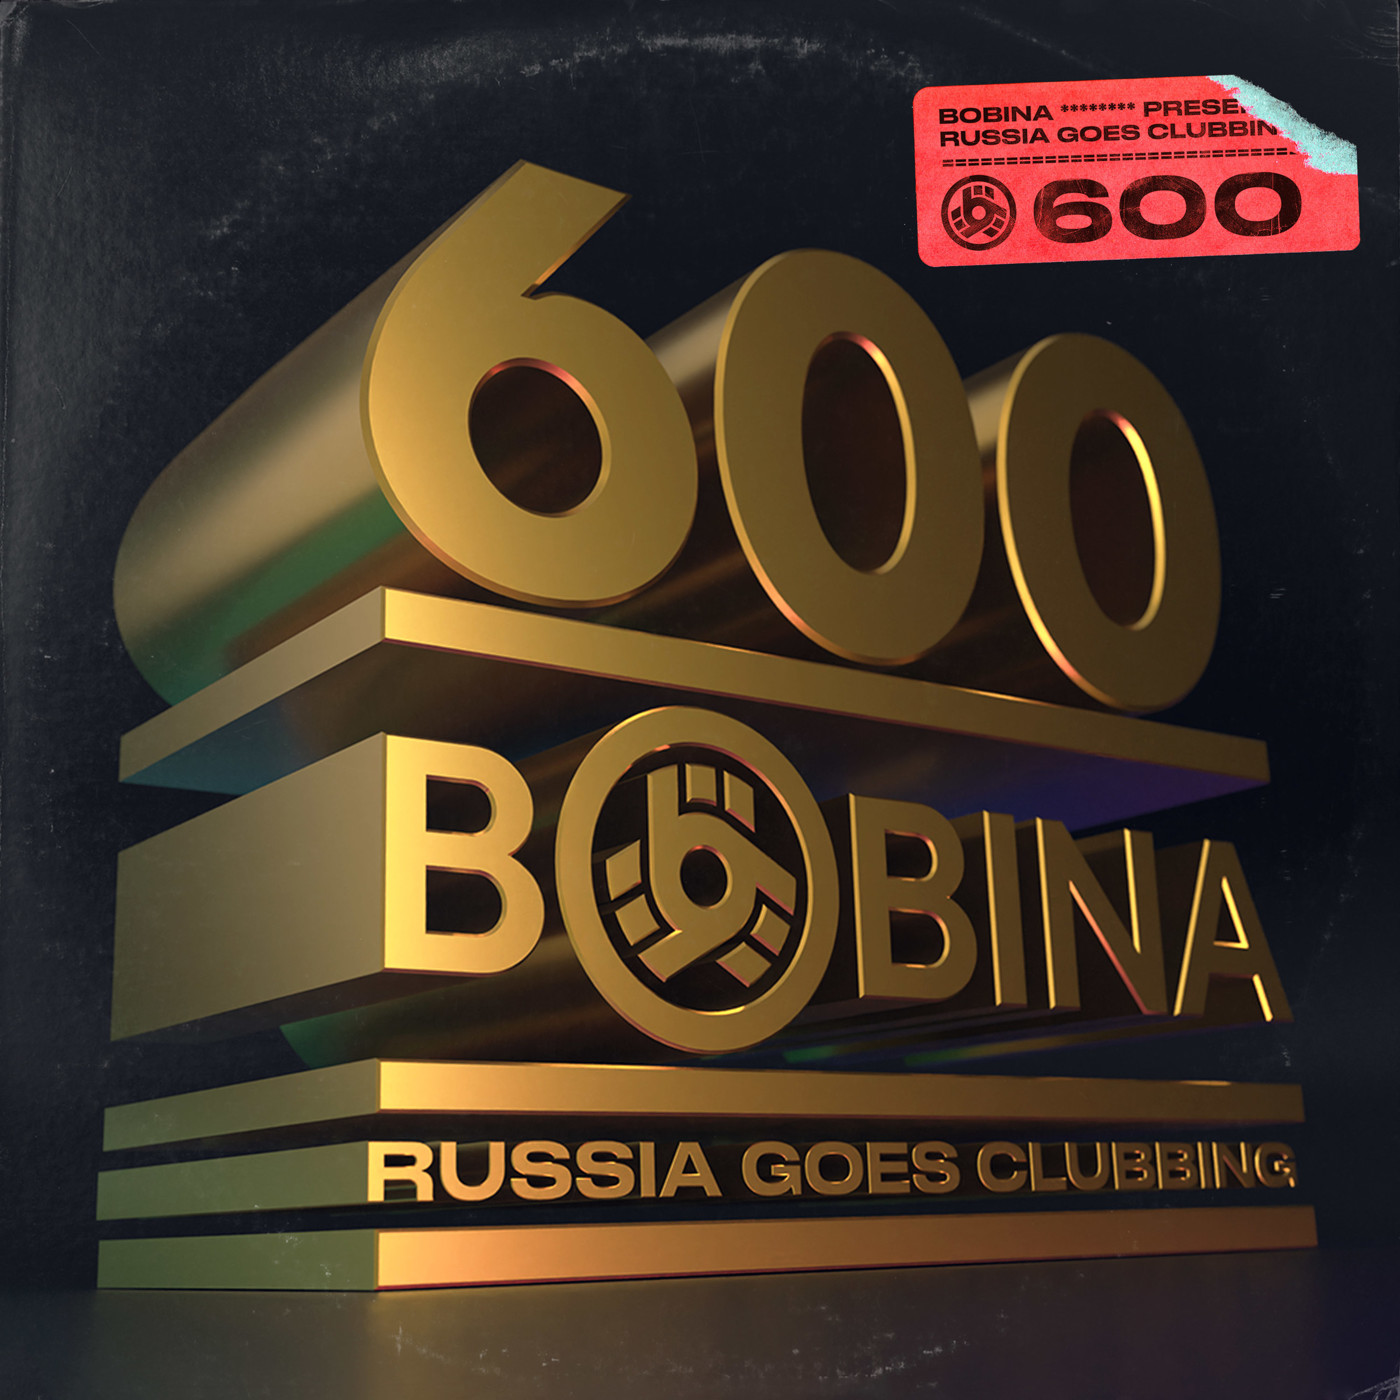 Russia Goes Clubbing #600